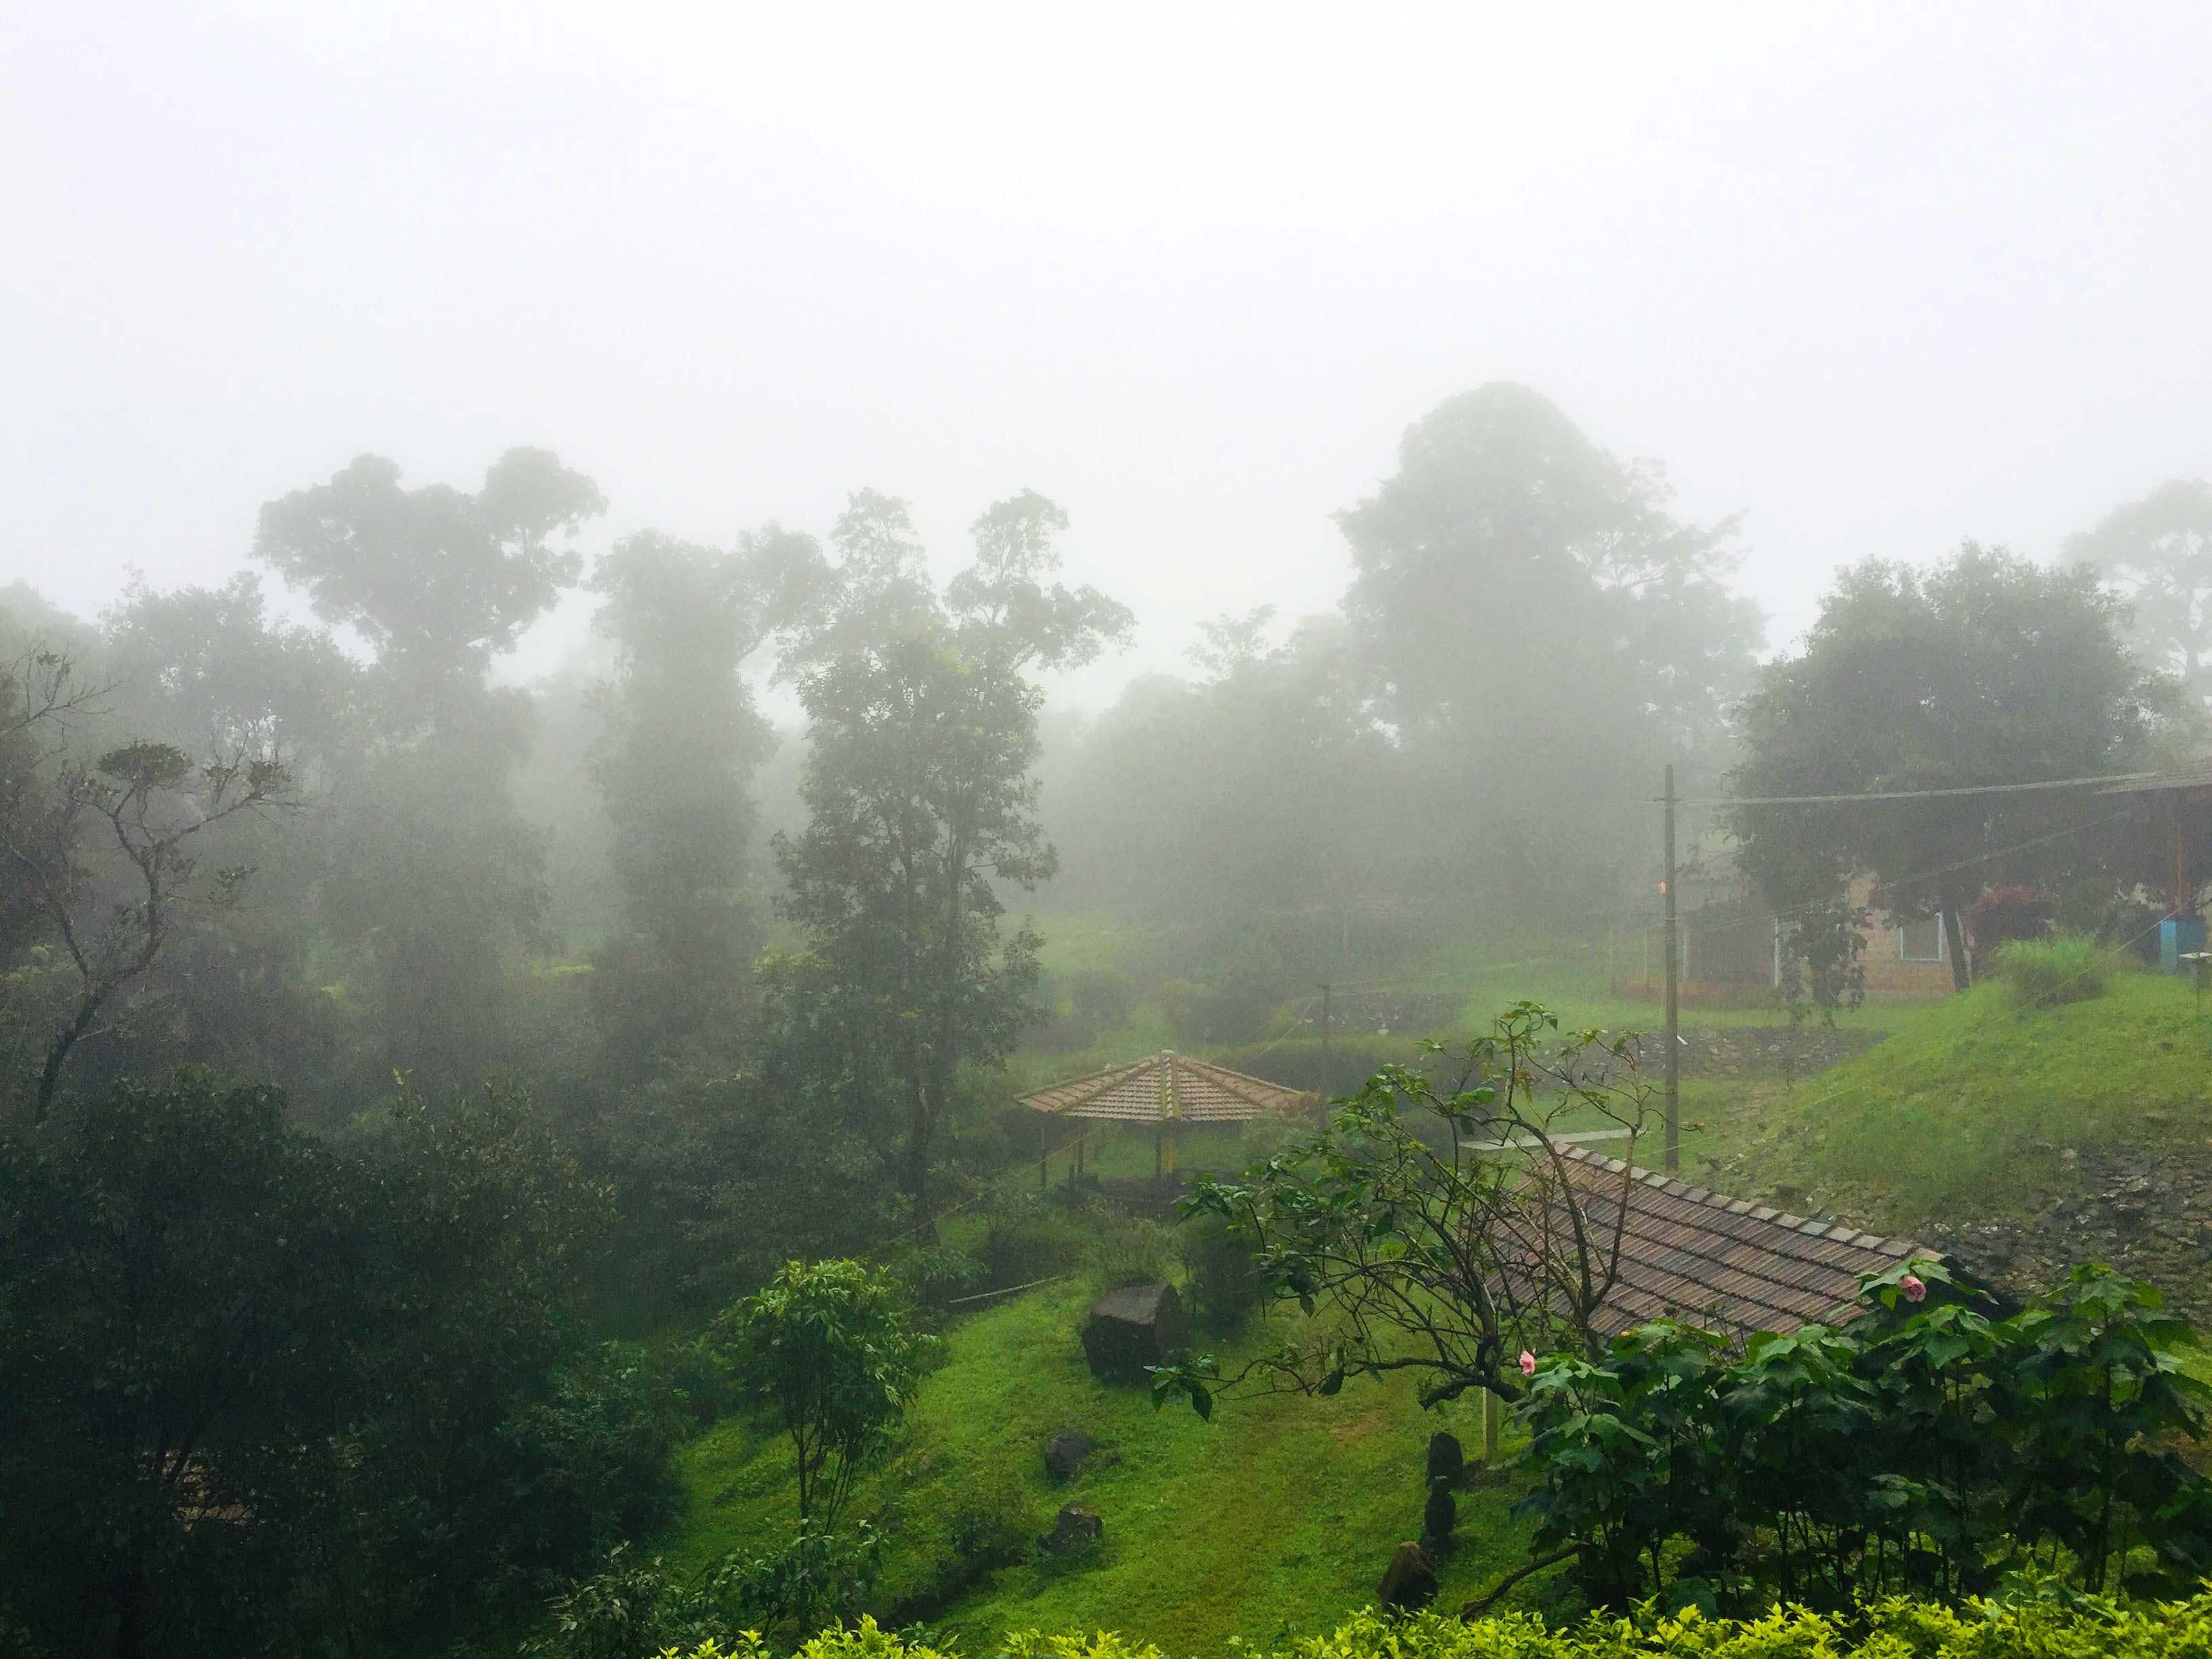 Mist,Fog,Atmospheric phenomenon,Haze,Hill station,Vegetation,Morning,Tree,Drizzle,Sky